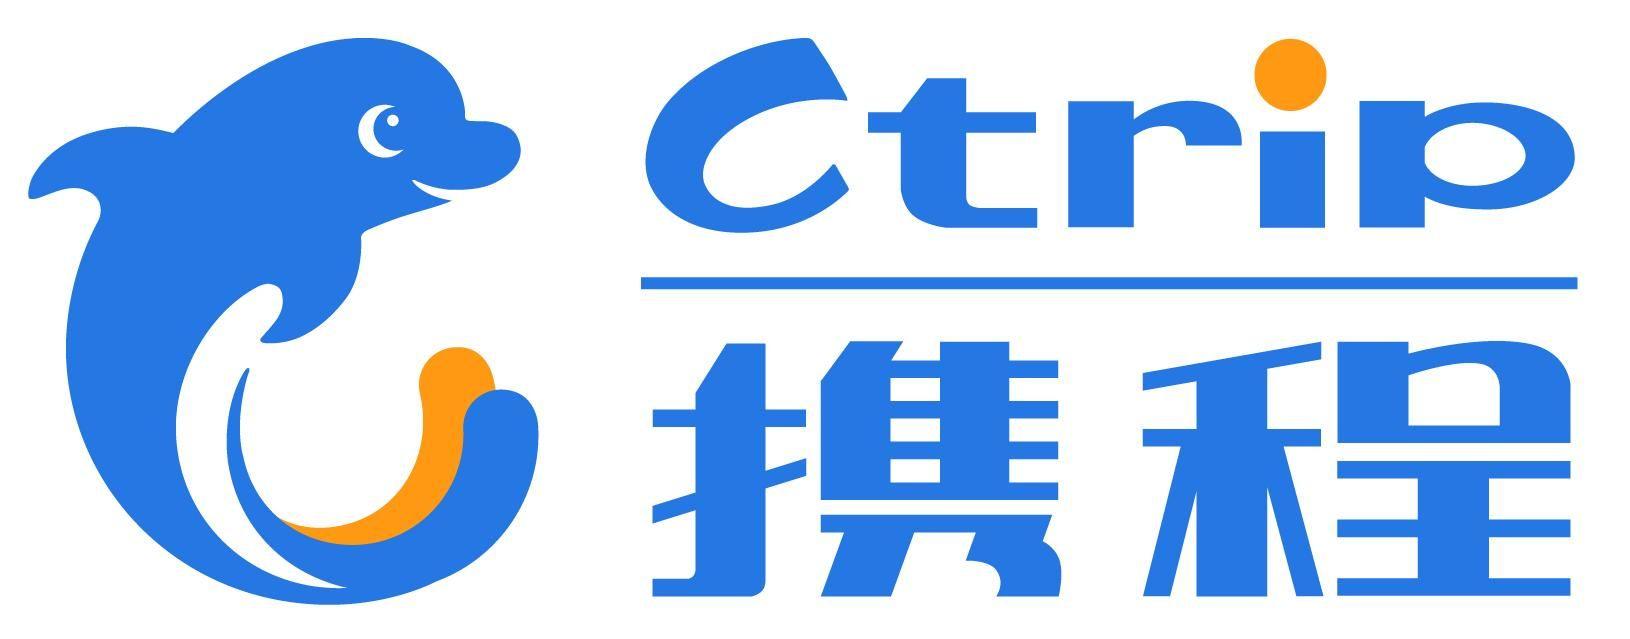 Ctrip Logo - A Deeper Look At Ctrip's Growth Prospects - Ctrip.com International ...